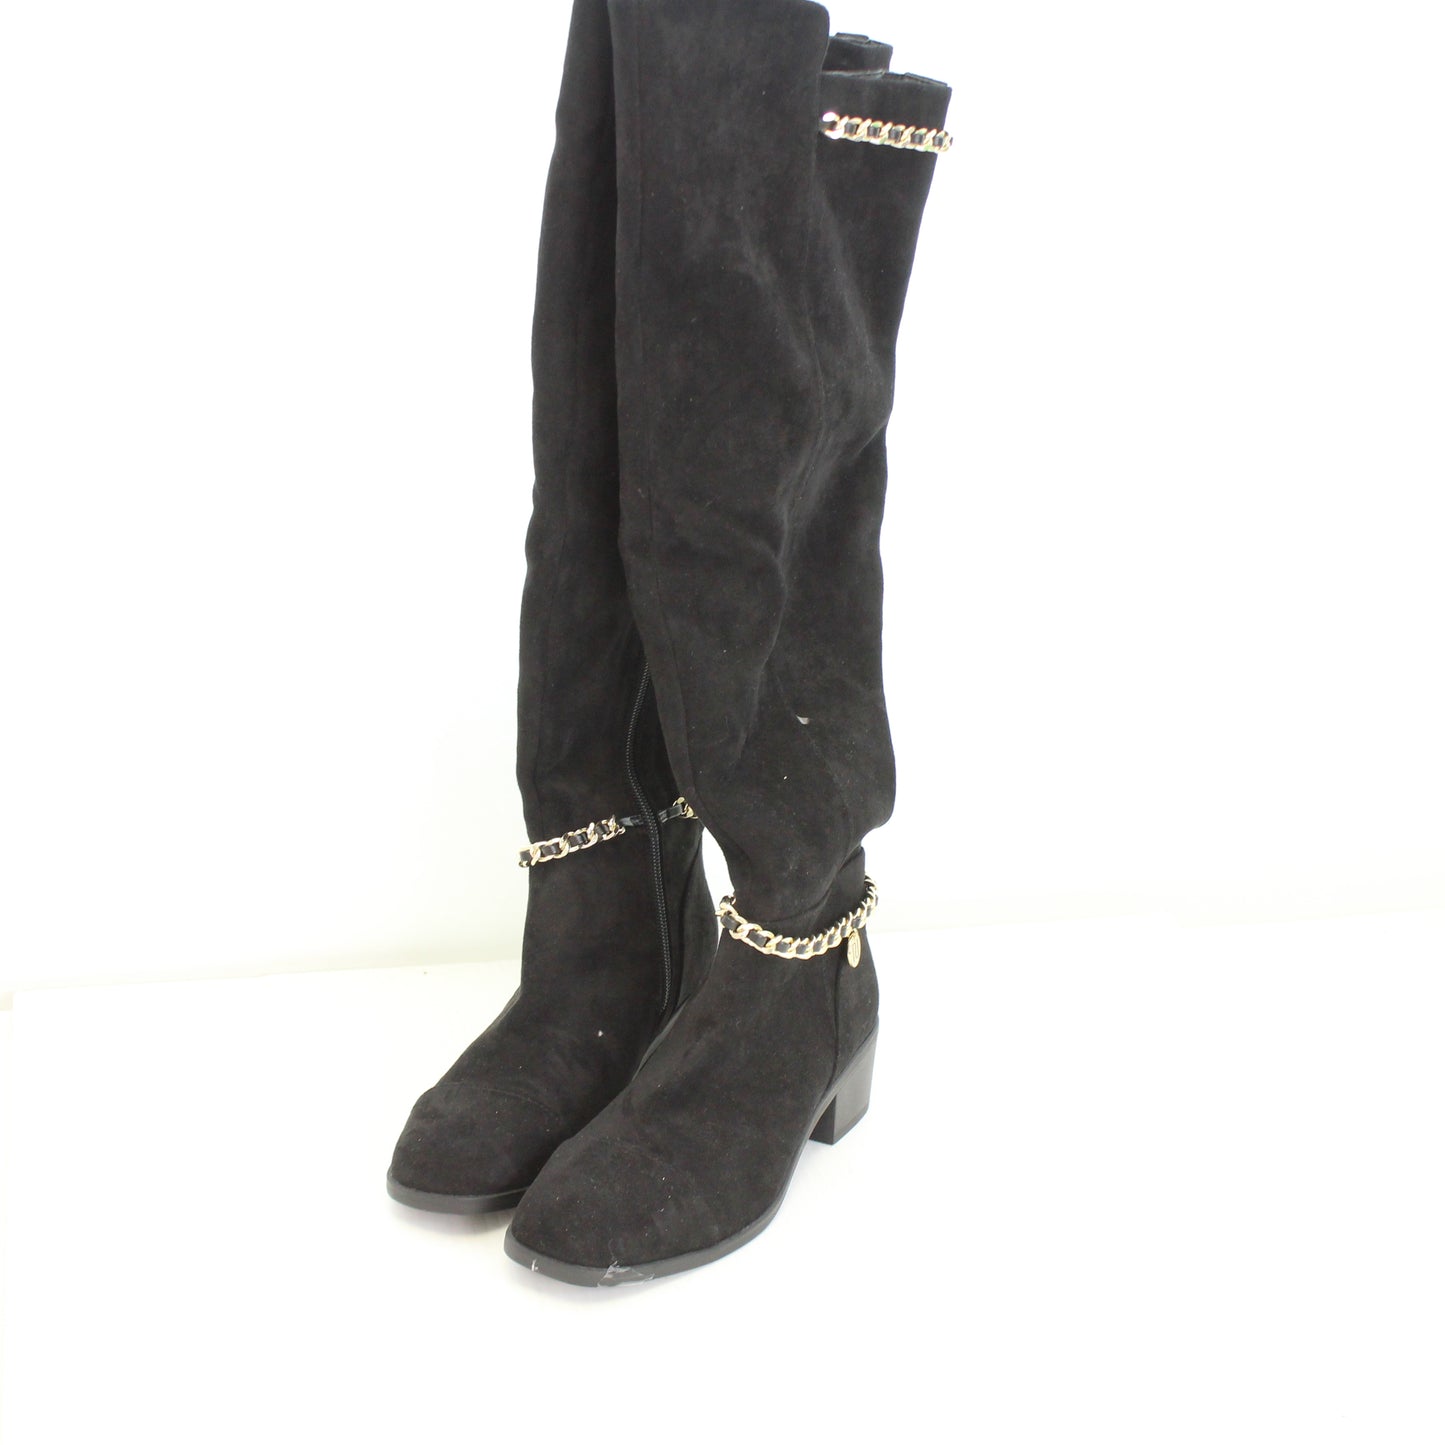 Women's Black Suede Knee High Boots